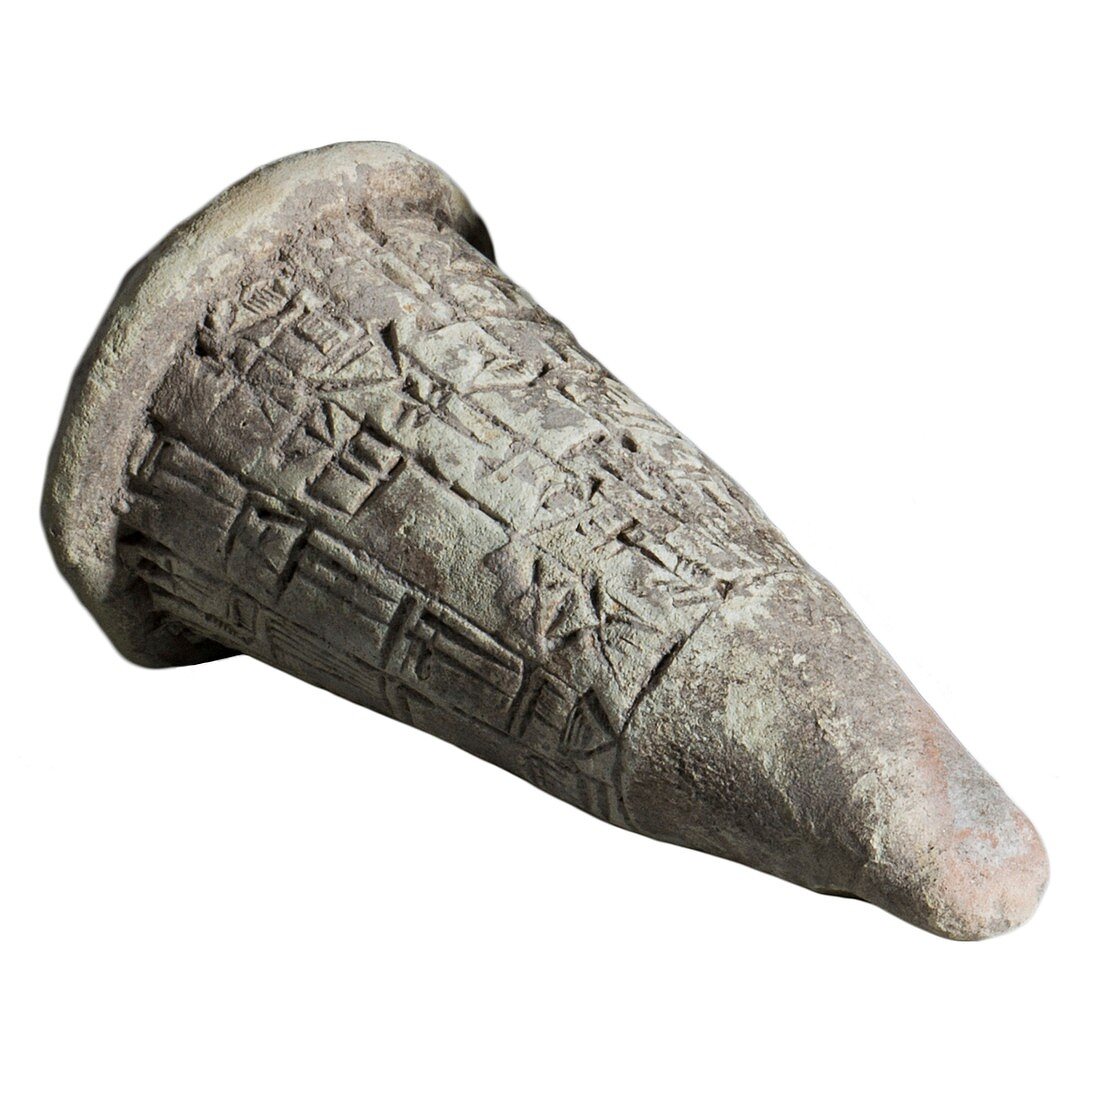 Cuneiform Clay cone